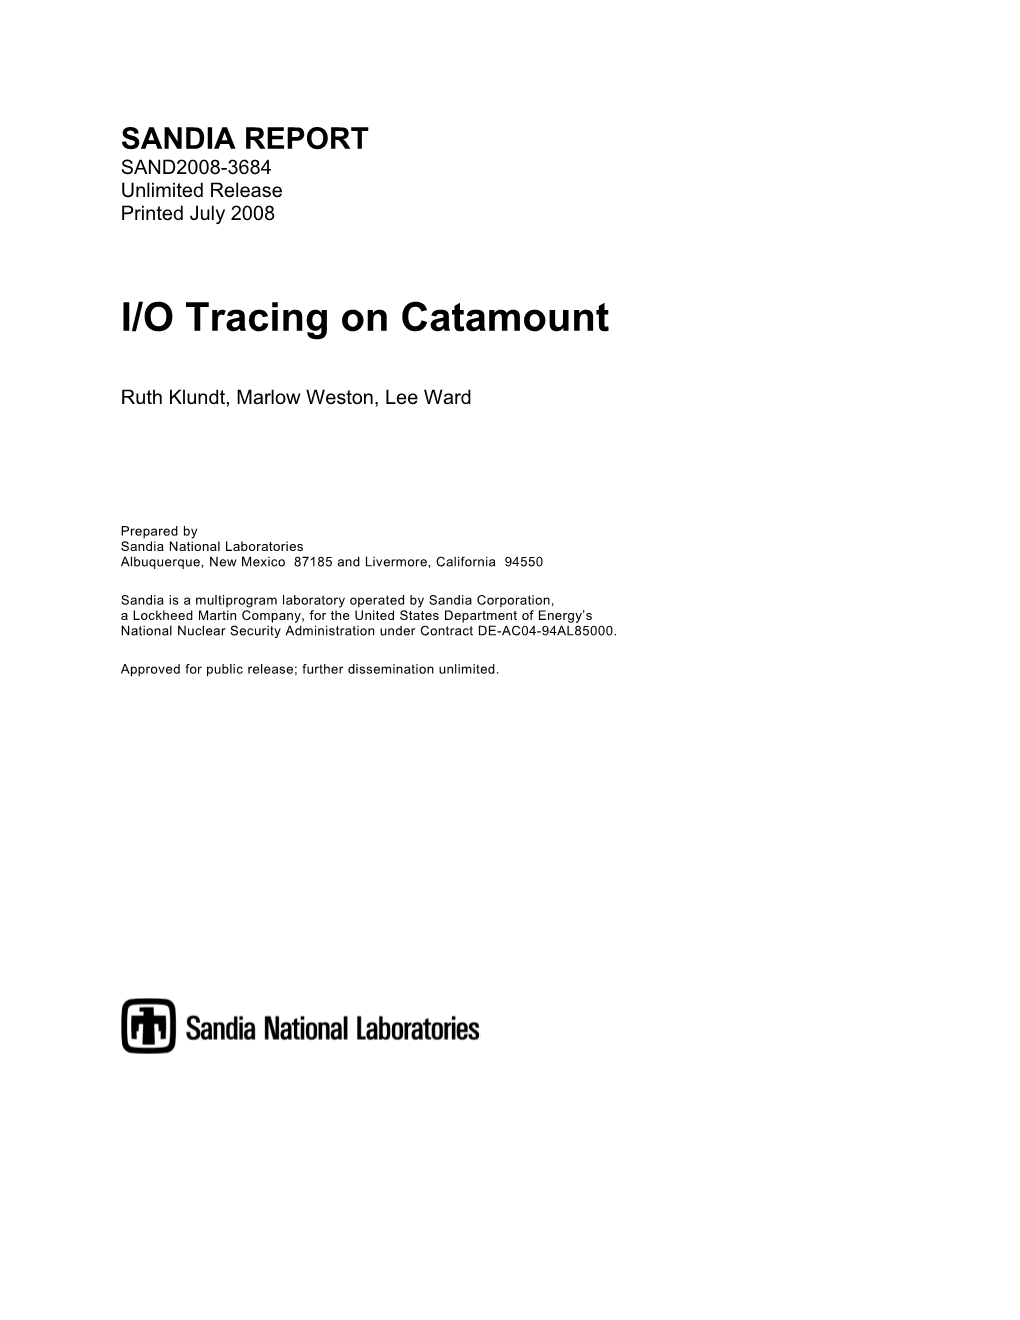 I/O Tracing on Catamount